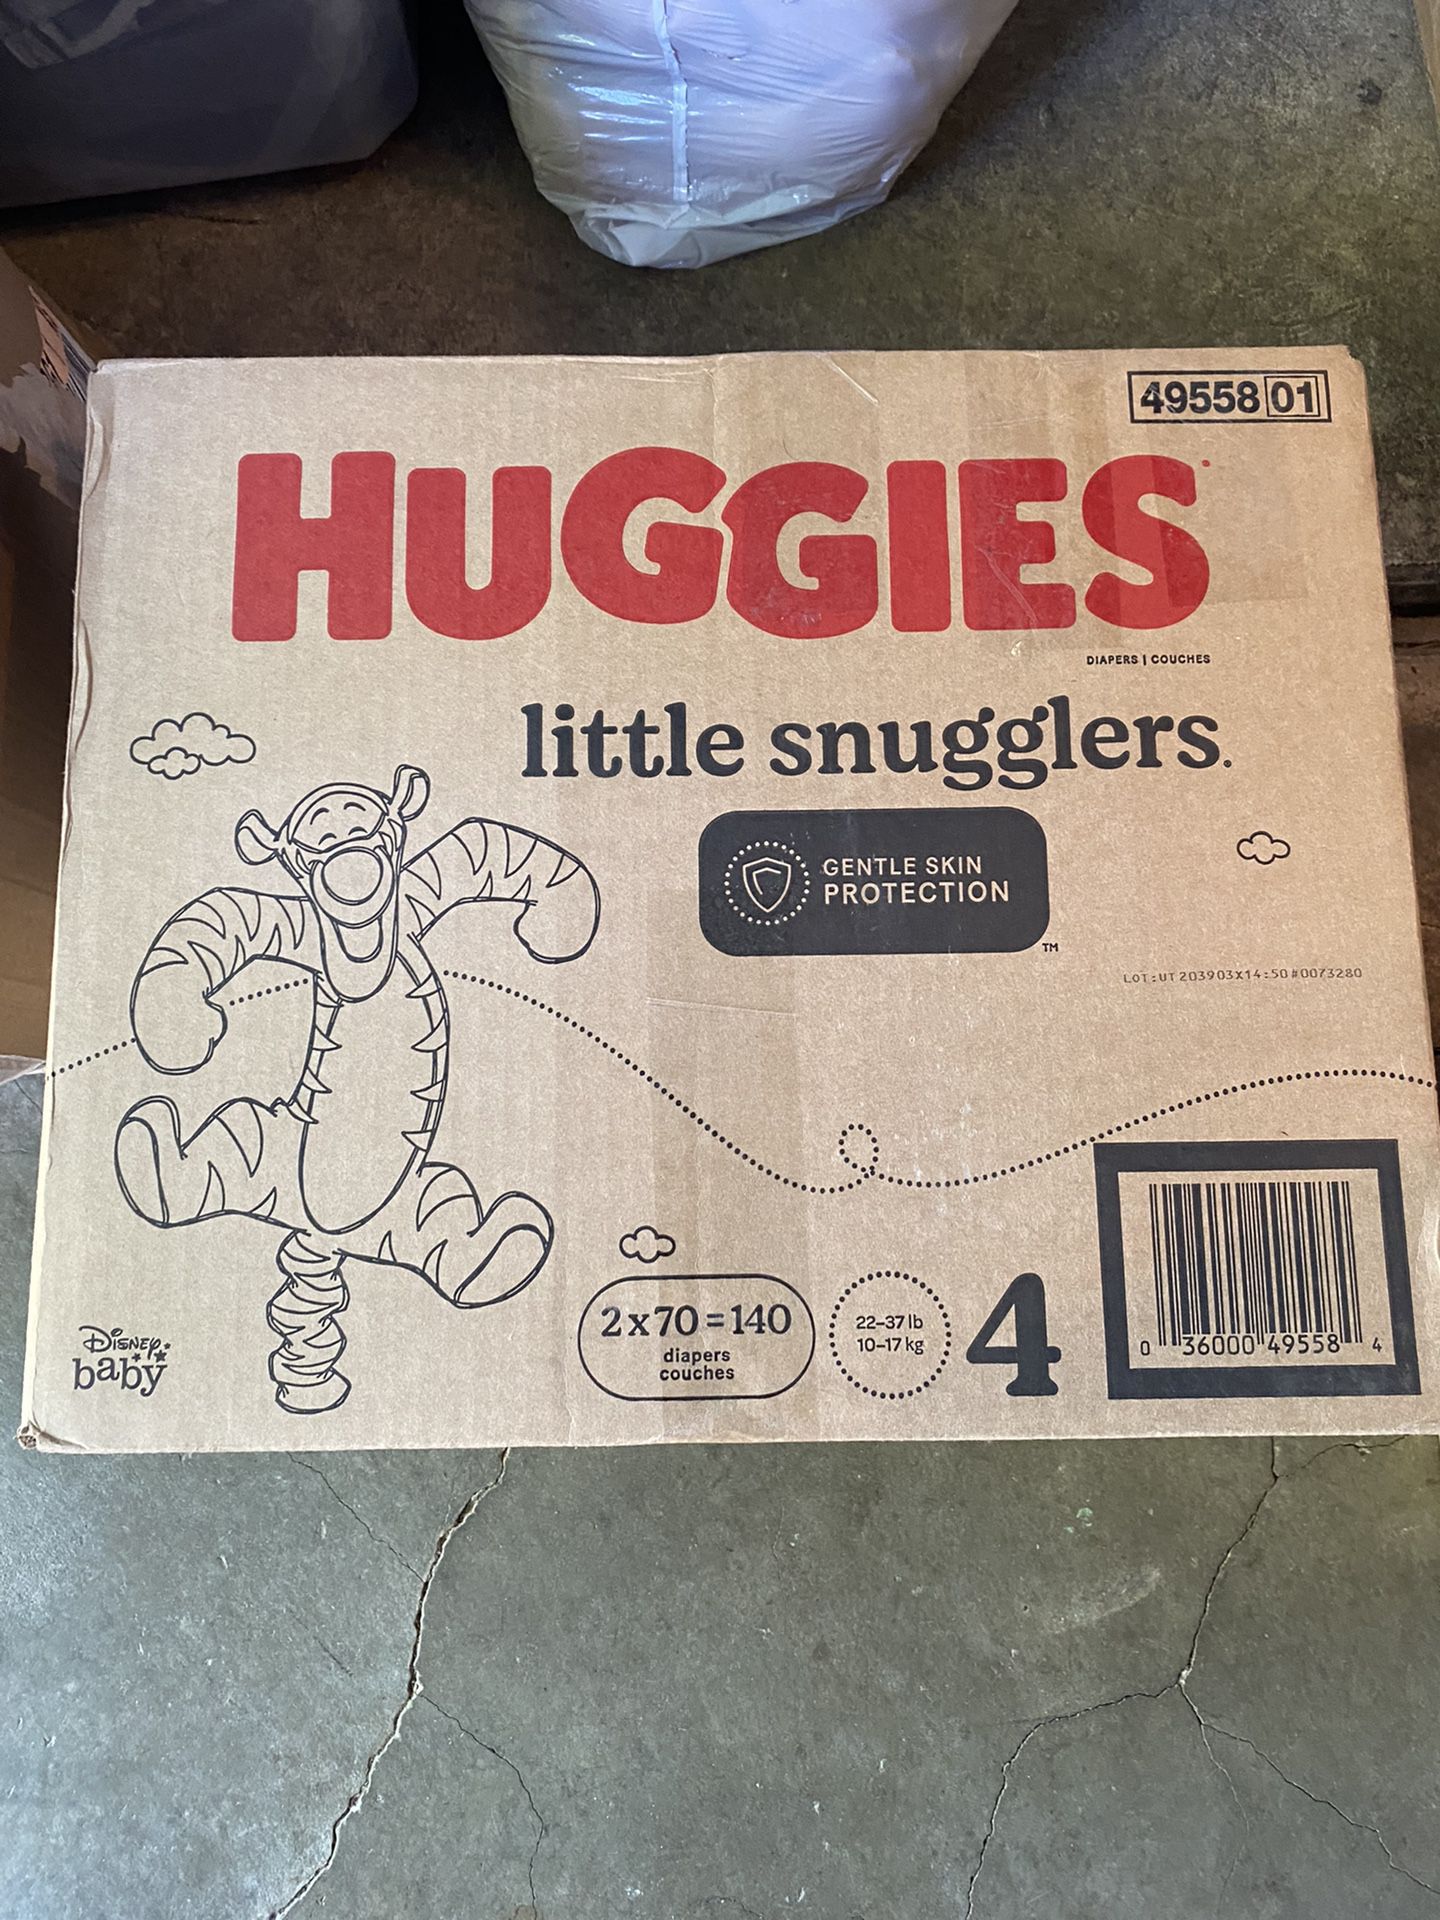 Huggies Little Snugglers size 4 